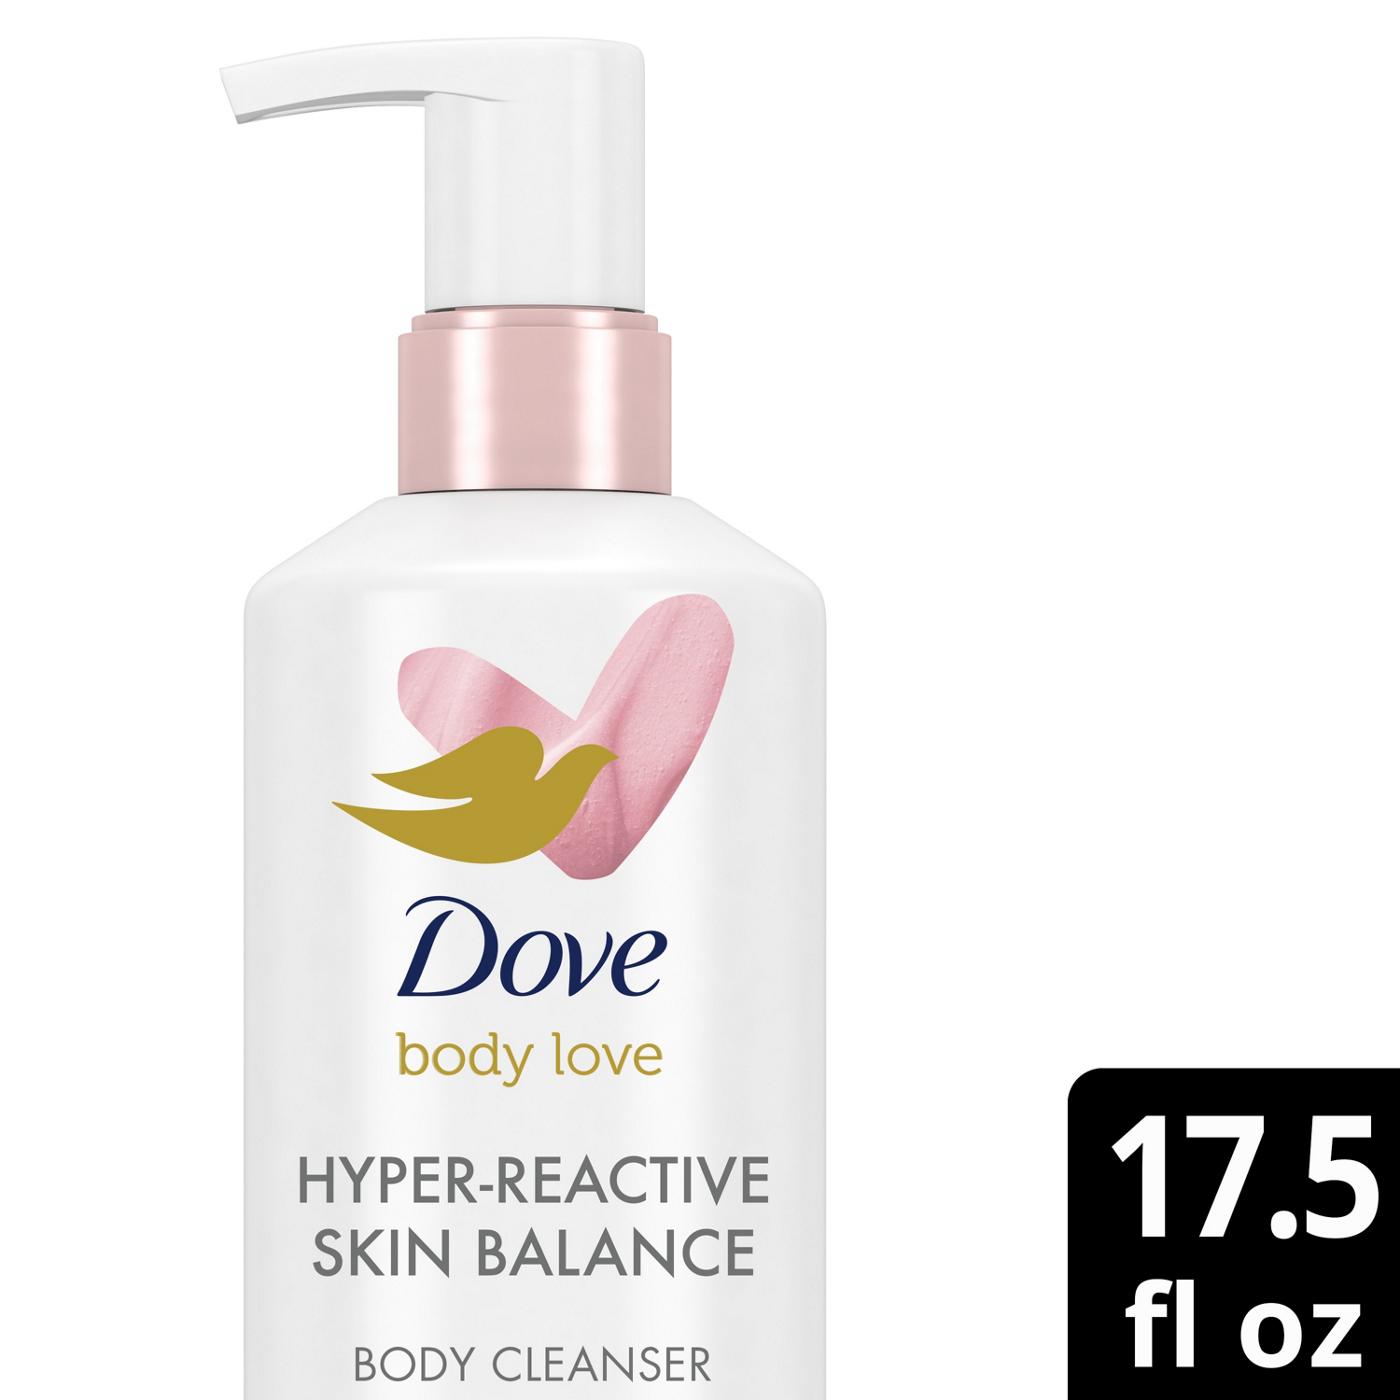 Dove Body Cleanser - Hyper-Reactive Skin Balance; image 6 of 10